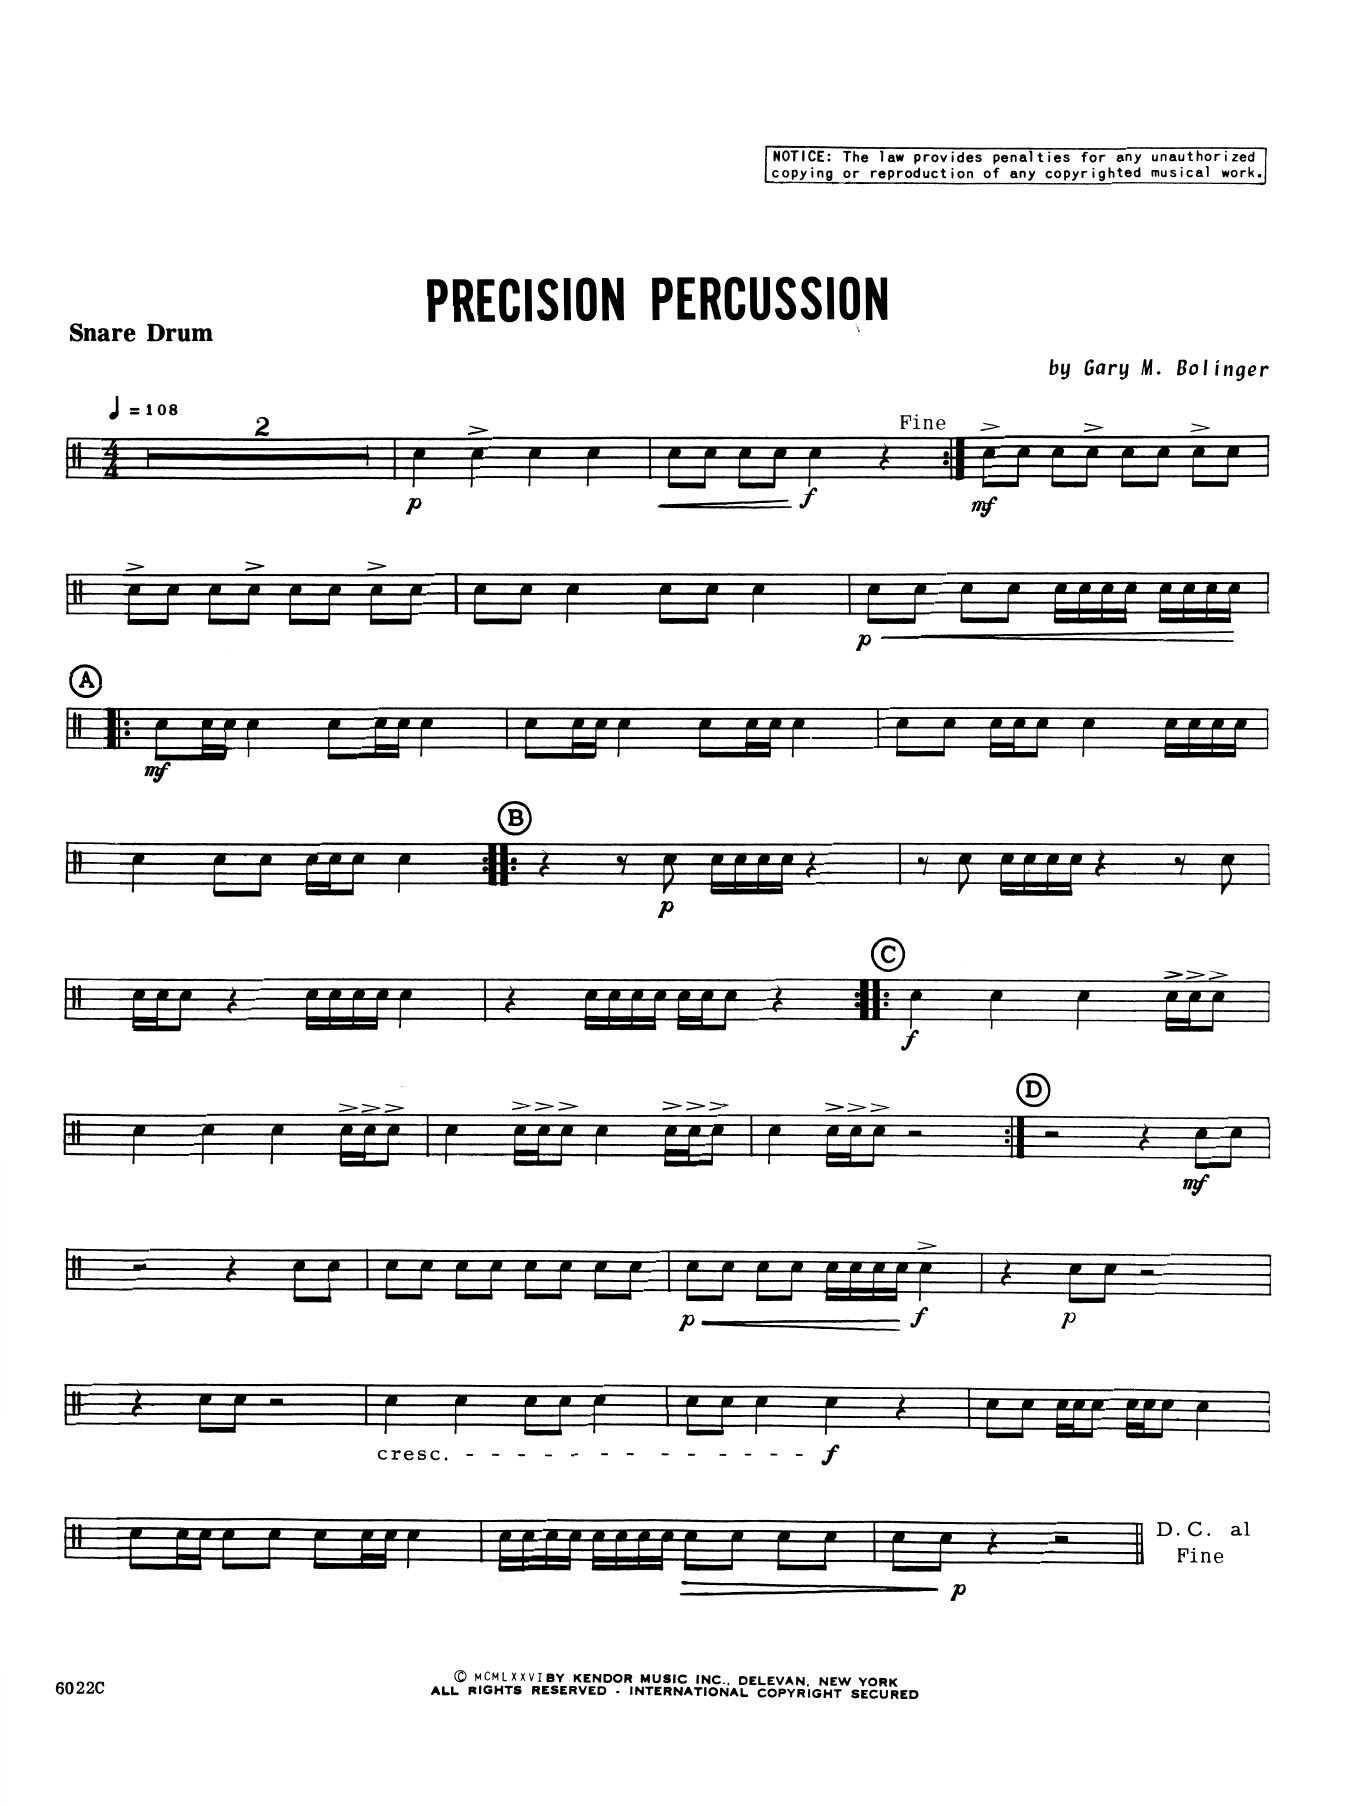 Download Gary M. Bolinger Precision Percussion - Percussion 1 Sheet Music